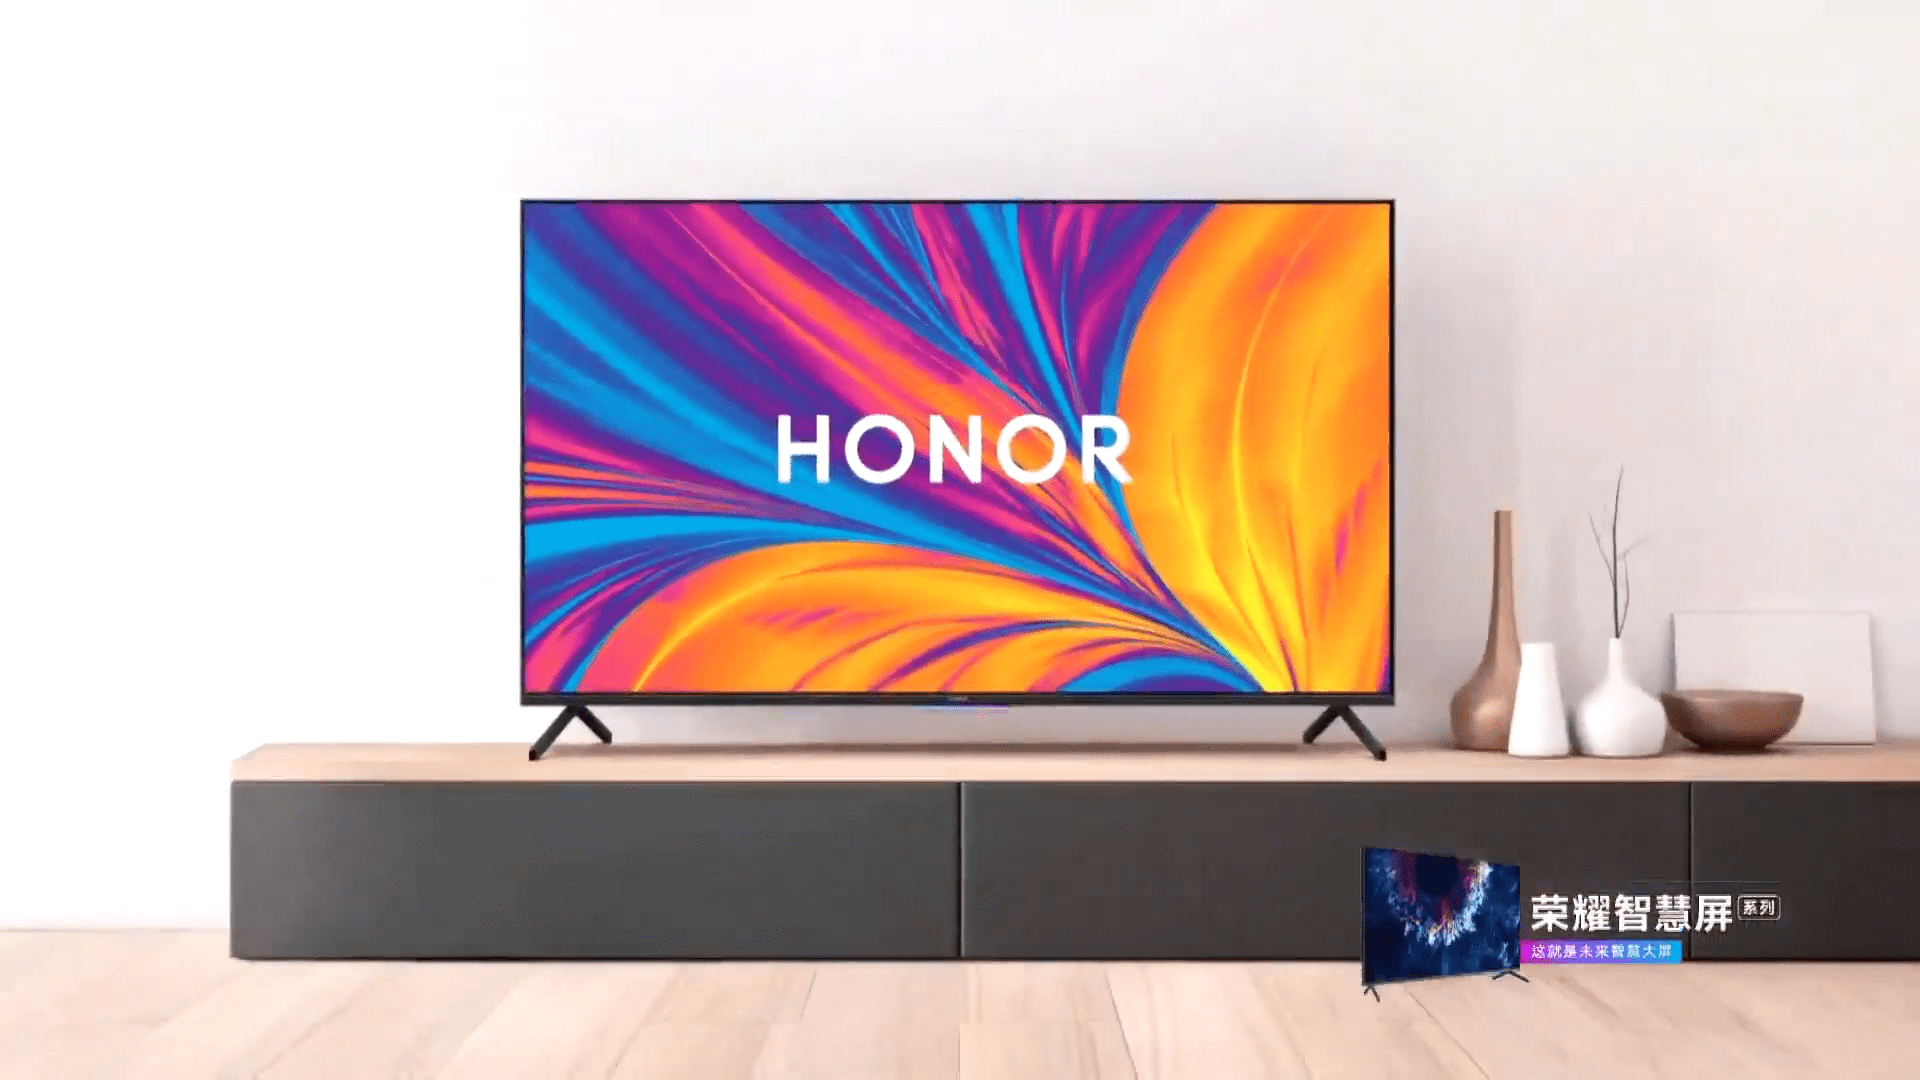 Honor Vision HarmonyOS TV from Huawei